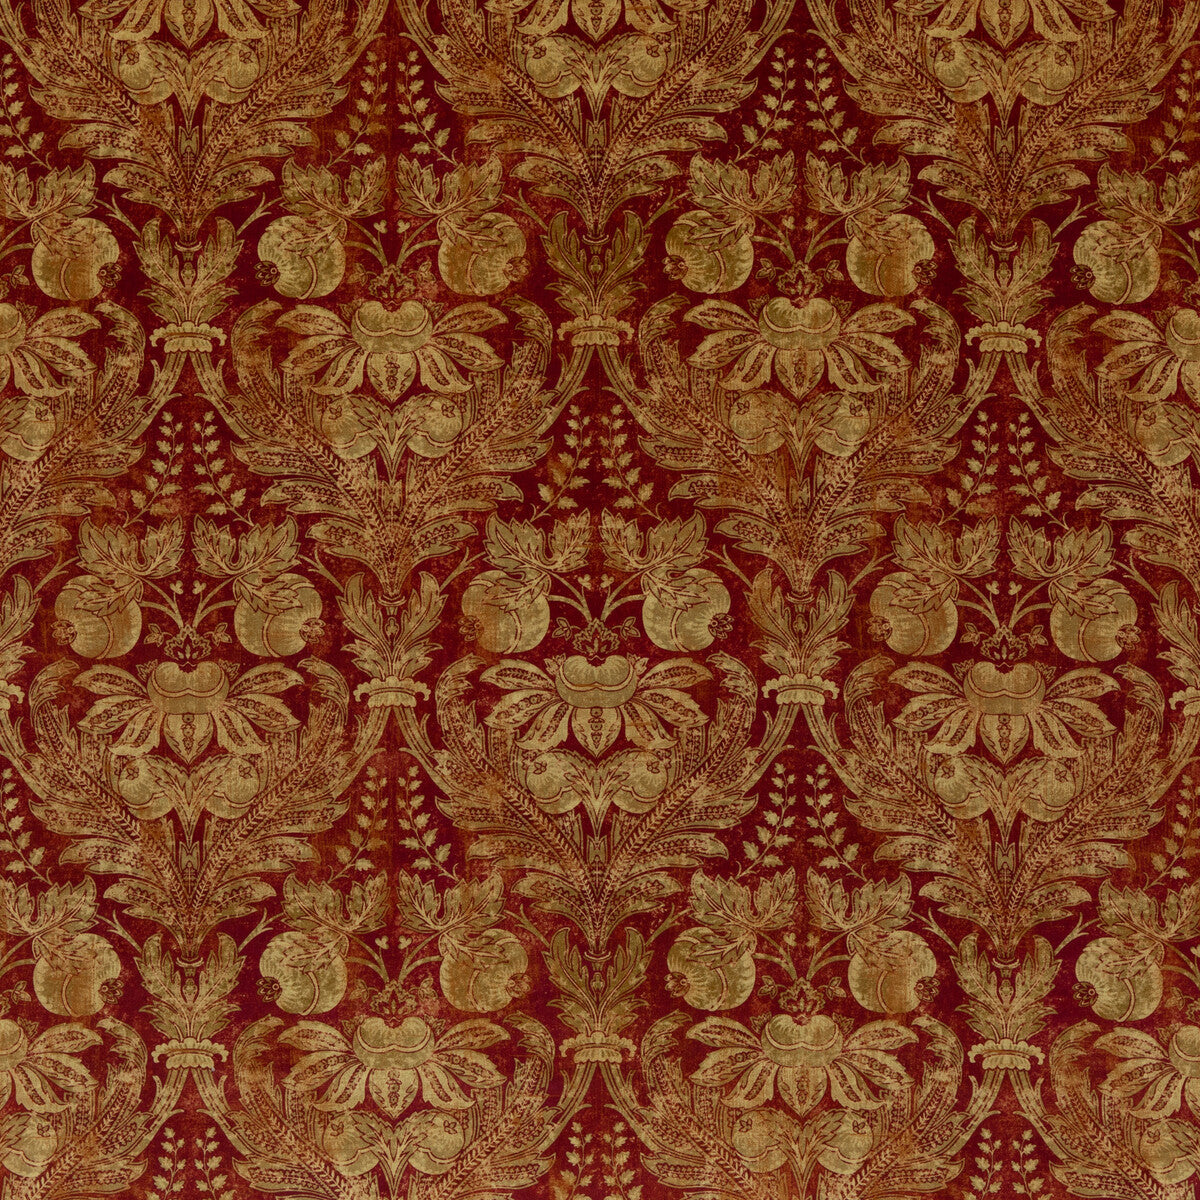 Lapura Velvet fabric in indian red color - pattern BP10829.2.0 - by G P &amp; J Baker in the Coromandel collection